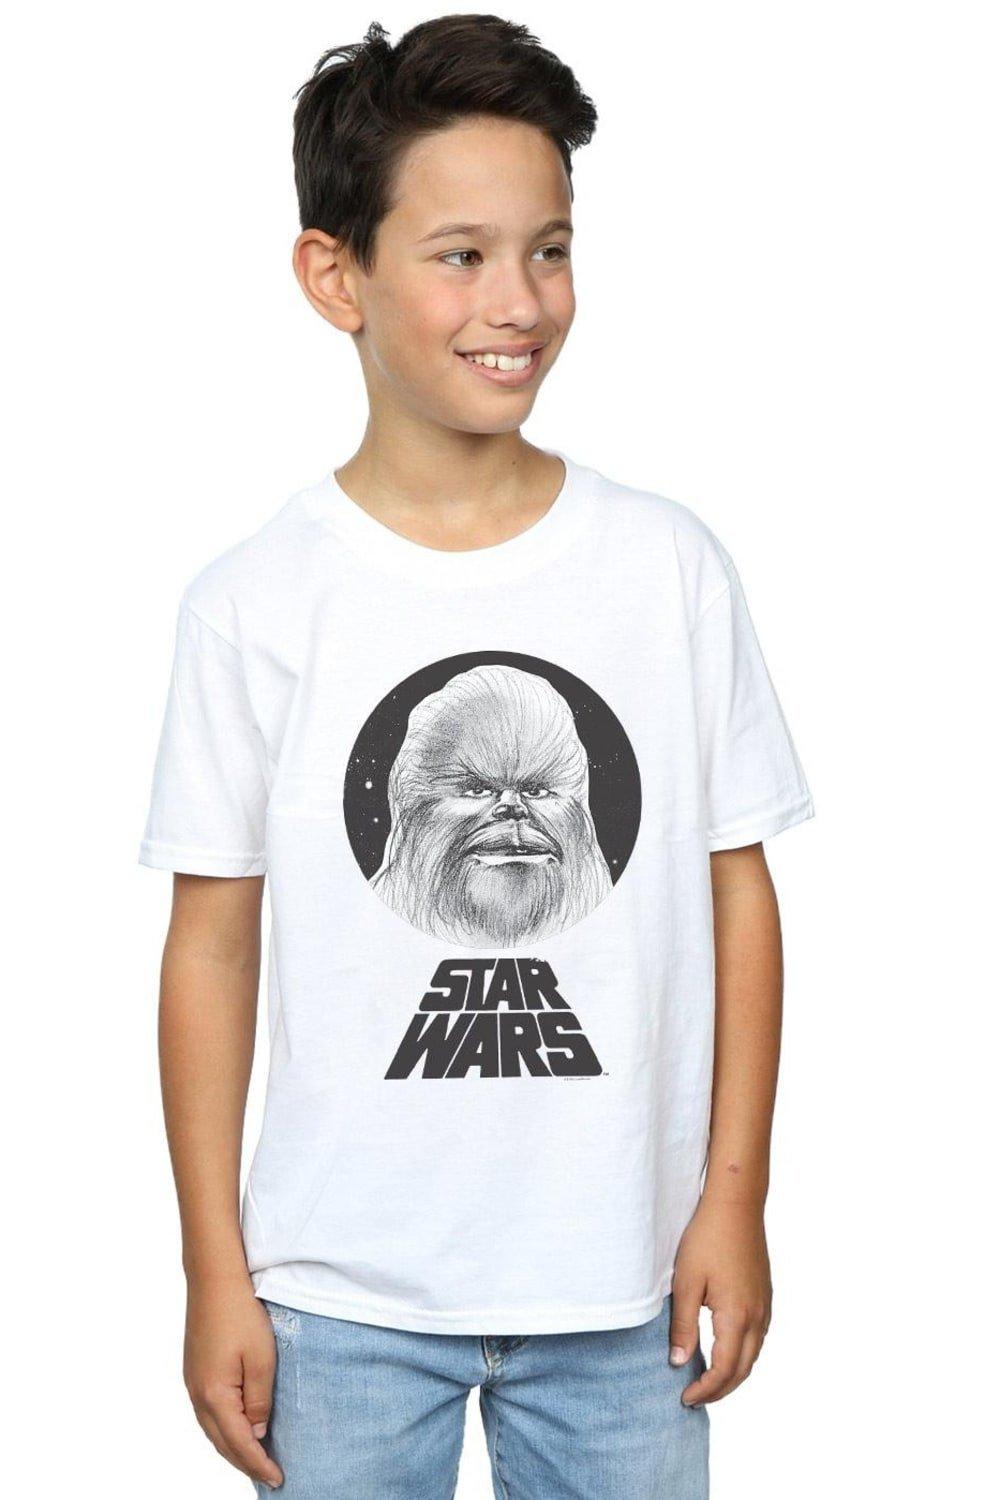 Chewbacca Sketch T-Shirt